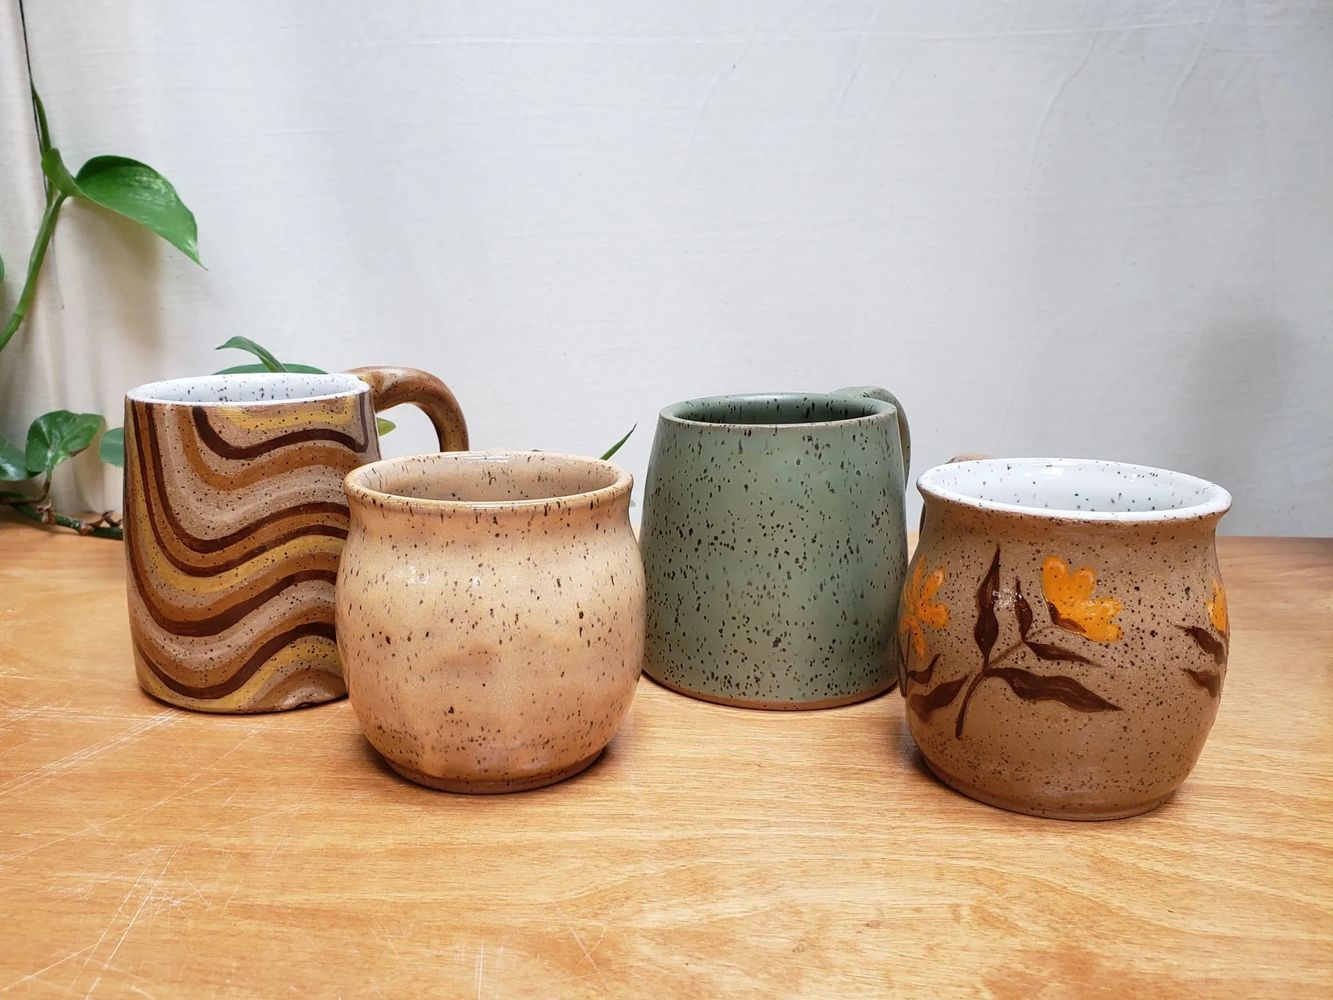 Pottery Classes and Ceramics Studio - South Charlotte NC